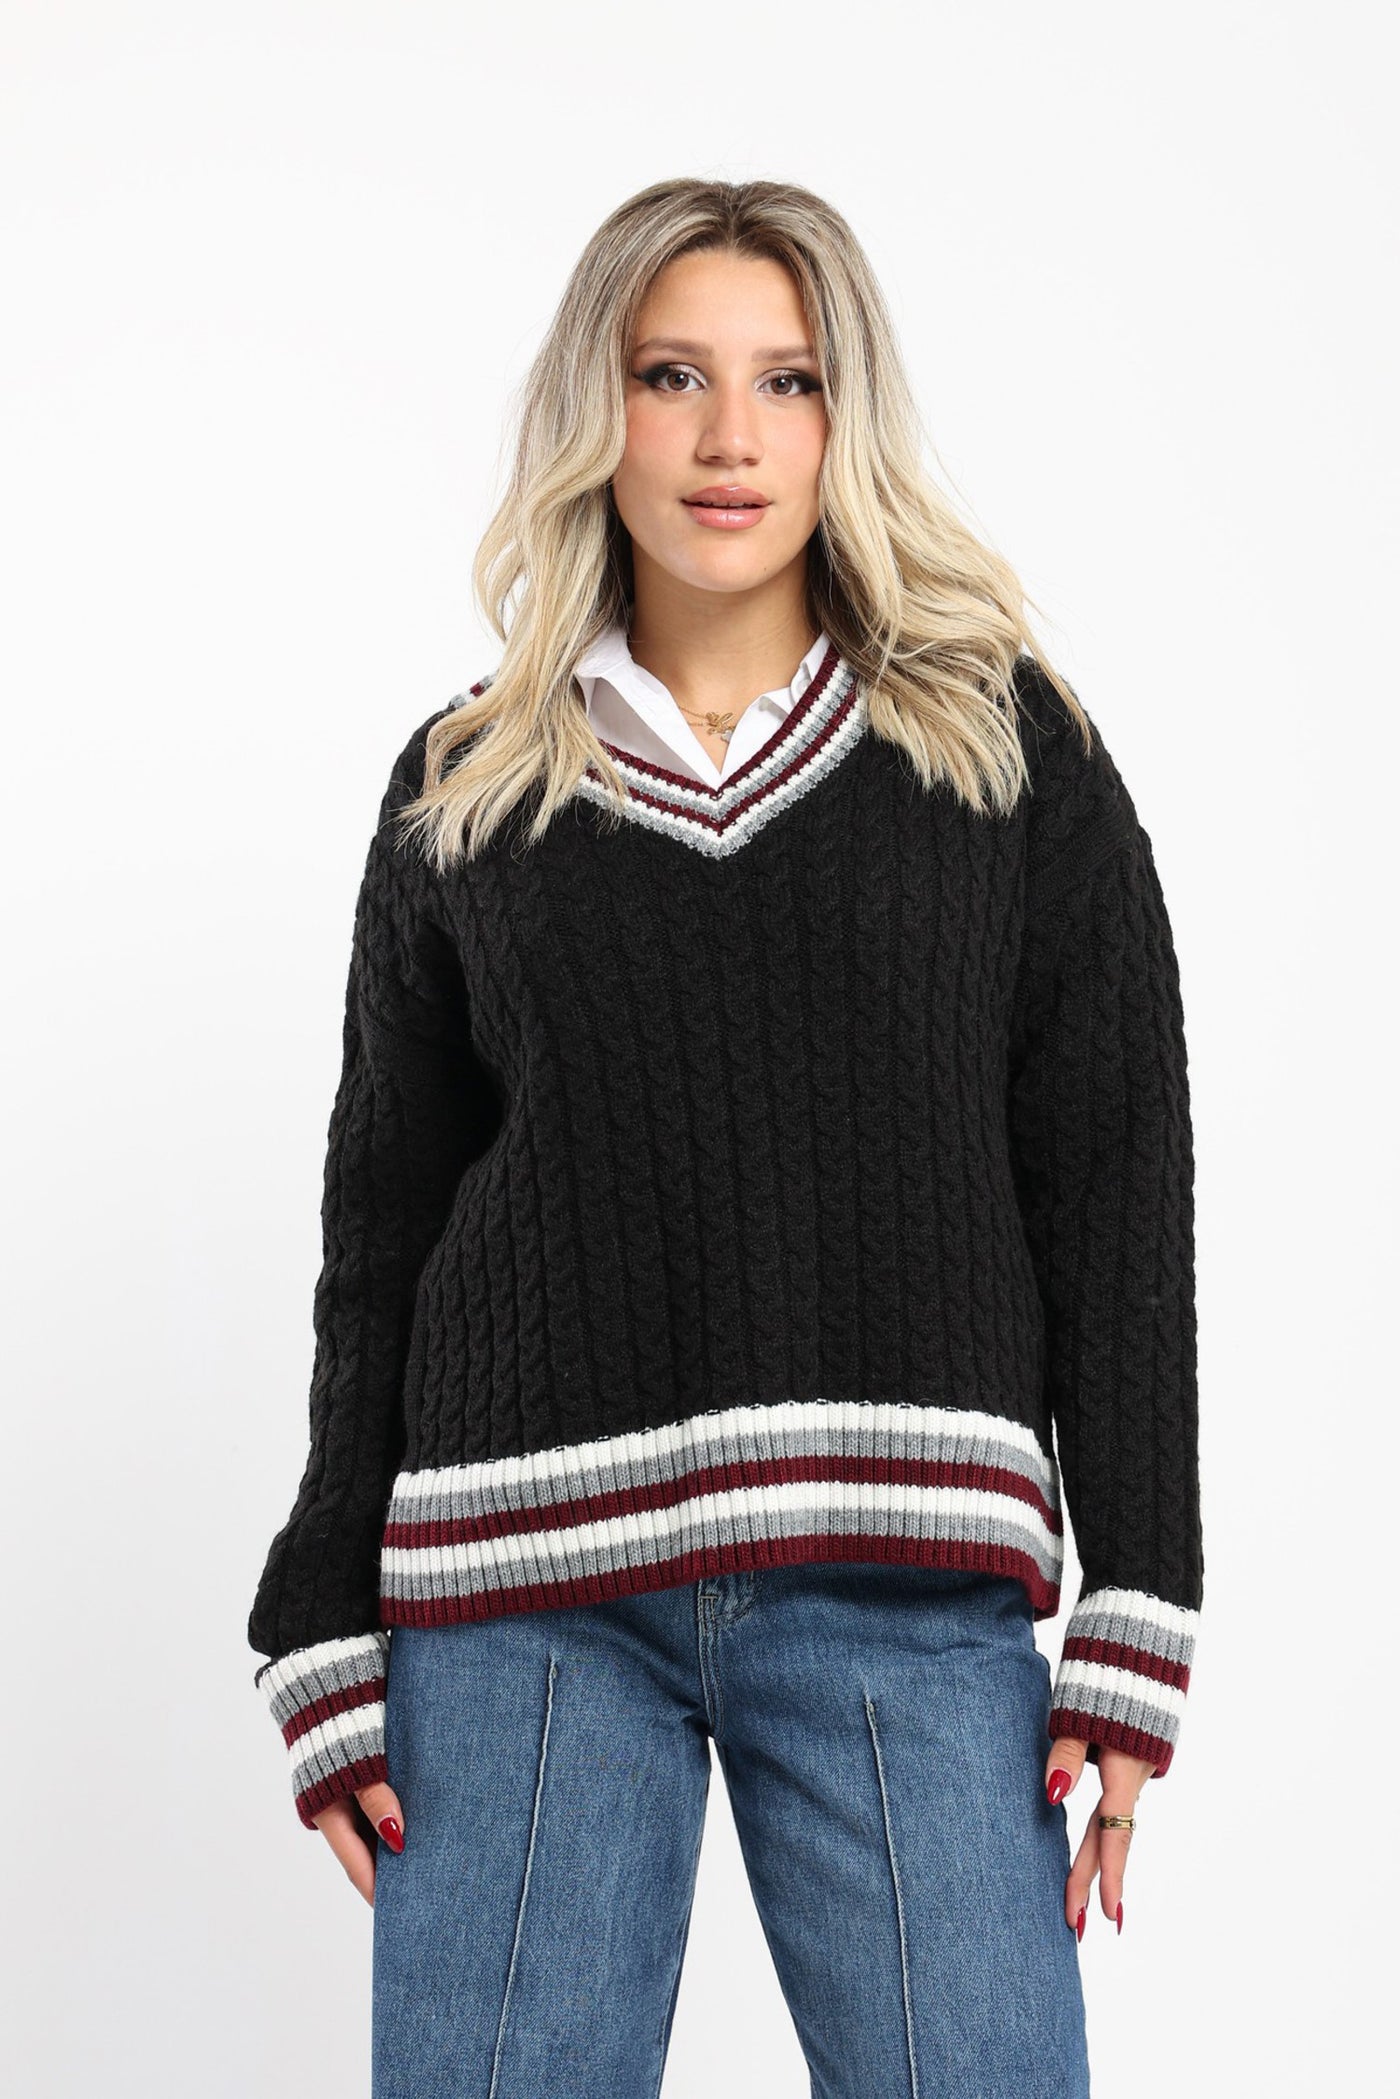 Sweater - Contrast Metallic - V-neck